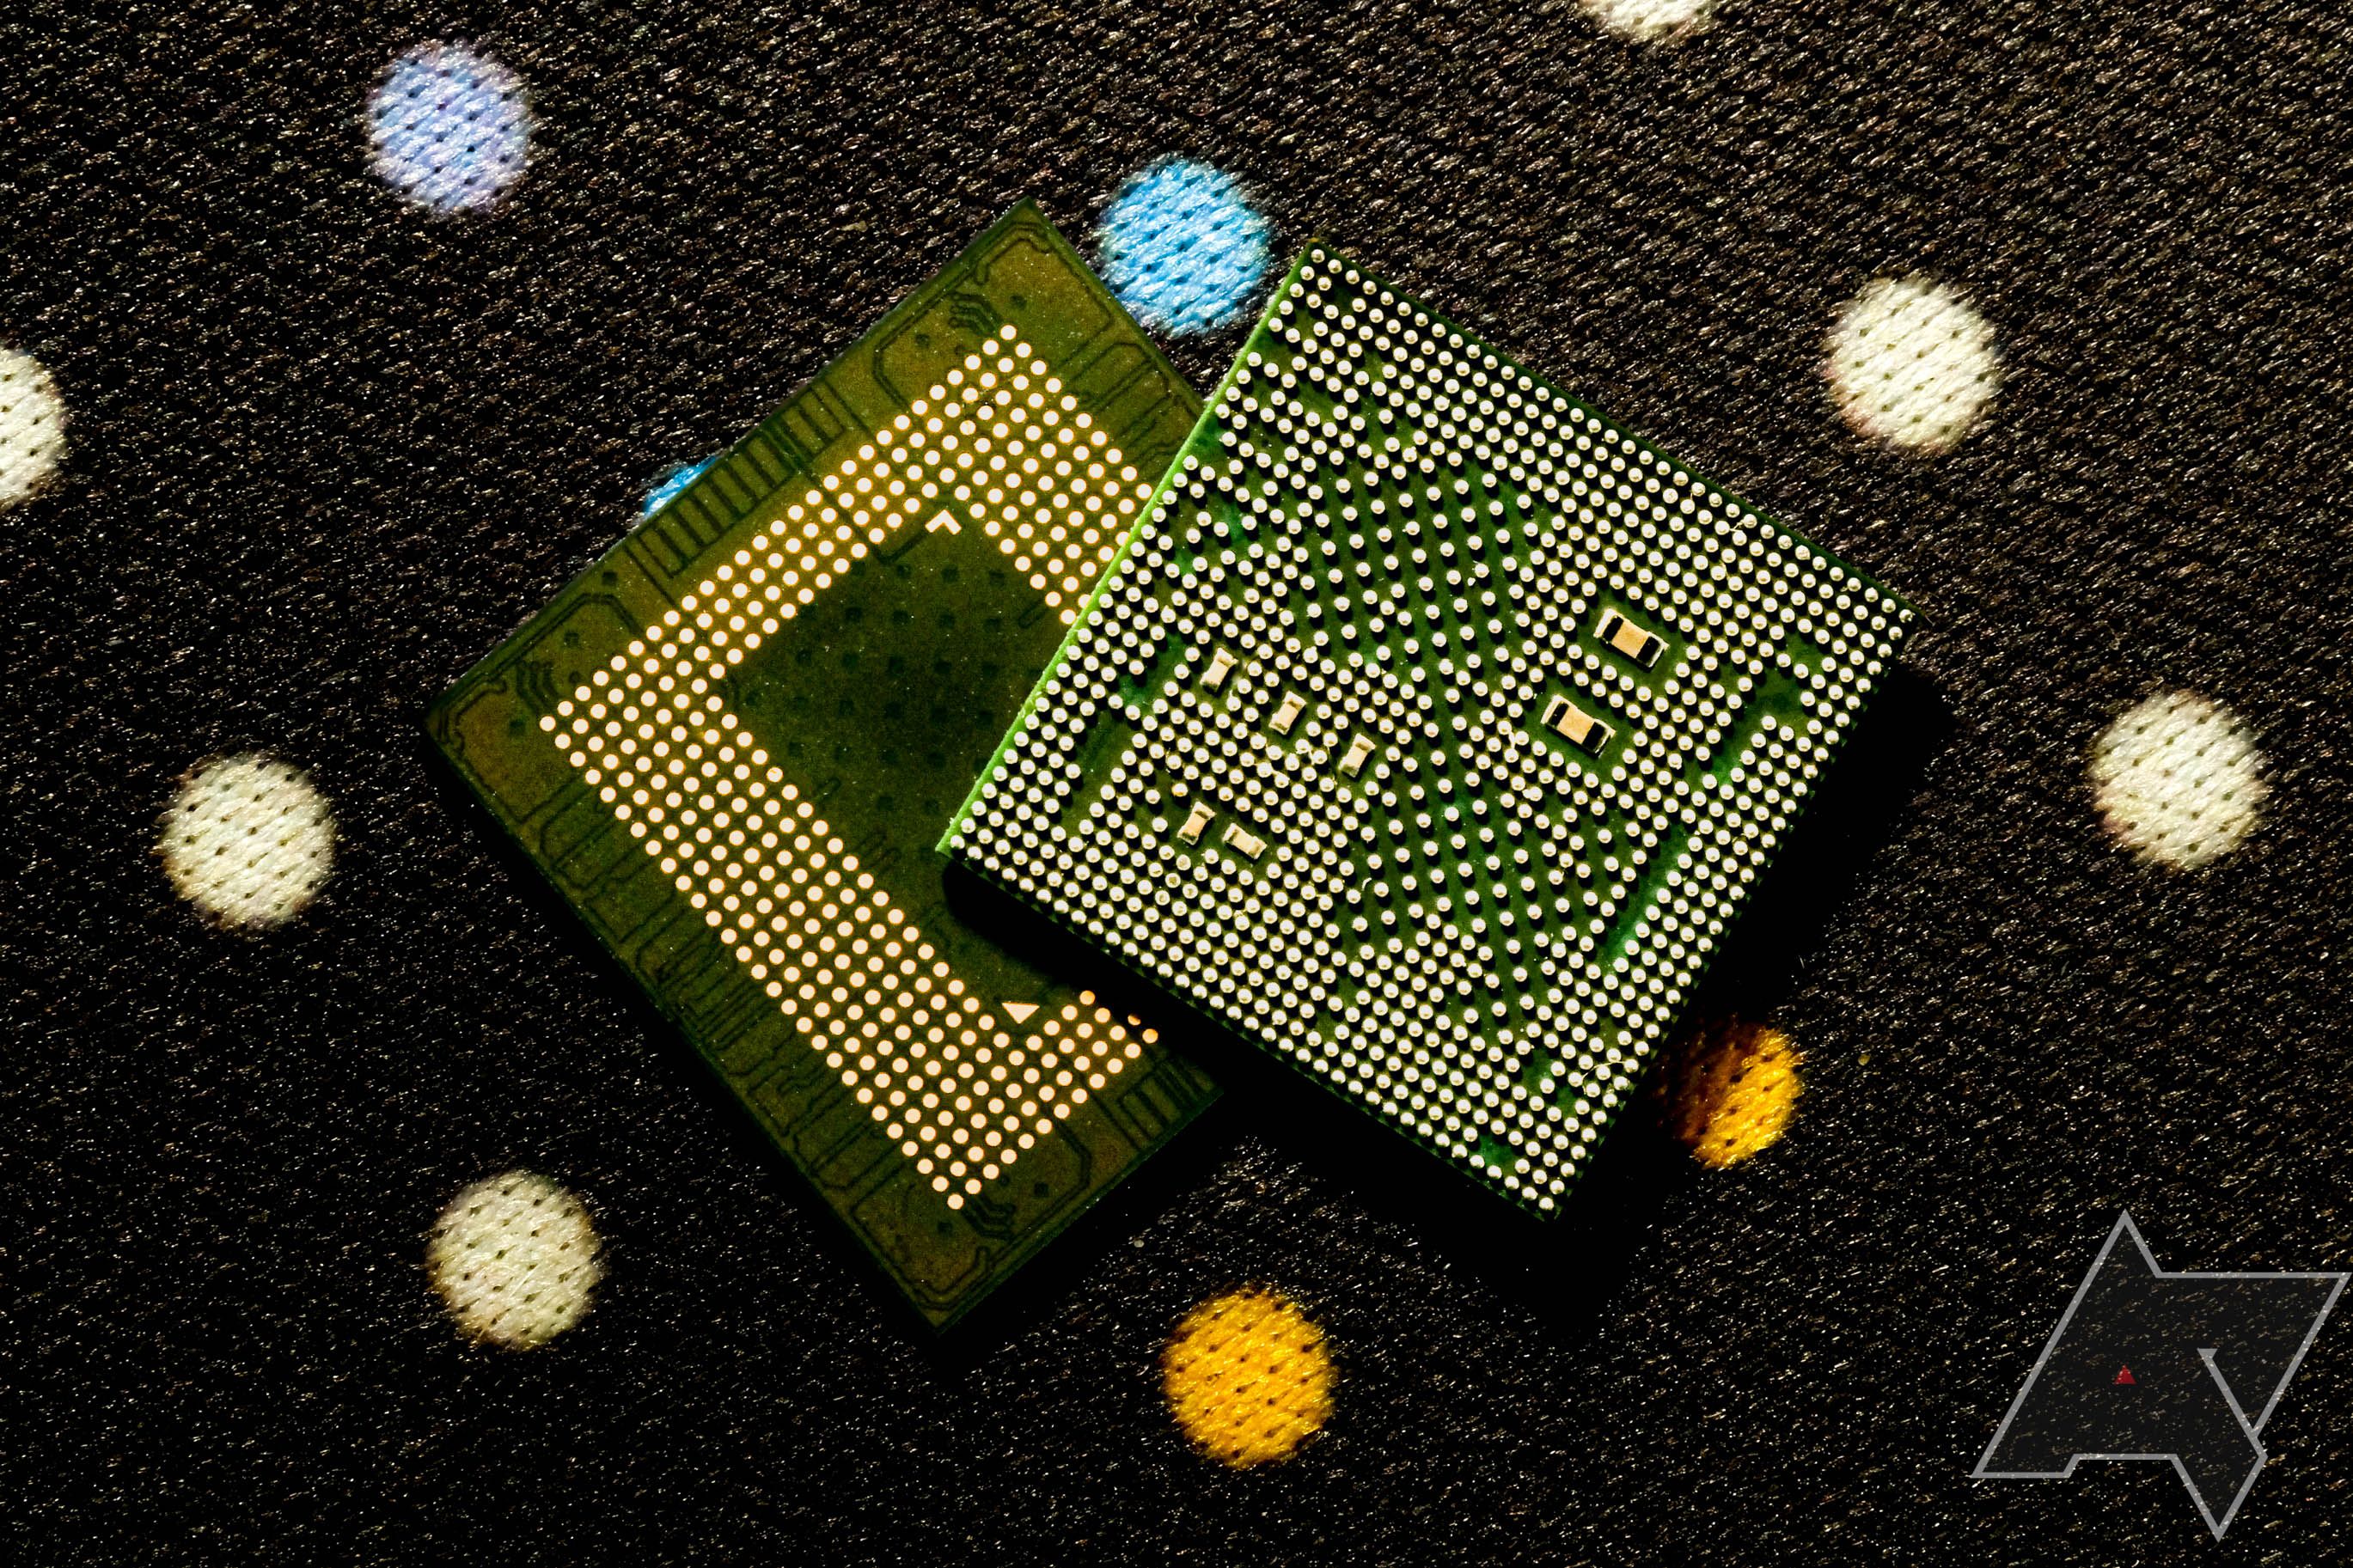 Chipset SoC keripik renyah gurih renyah